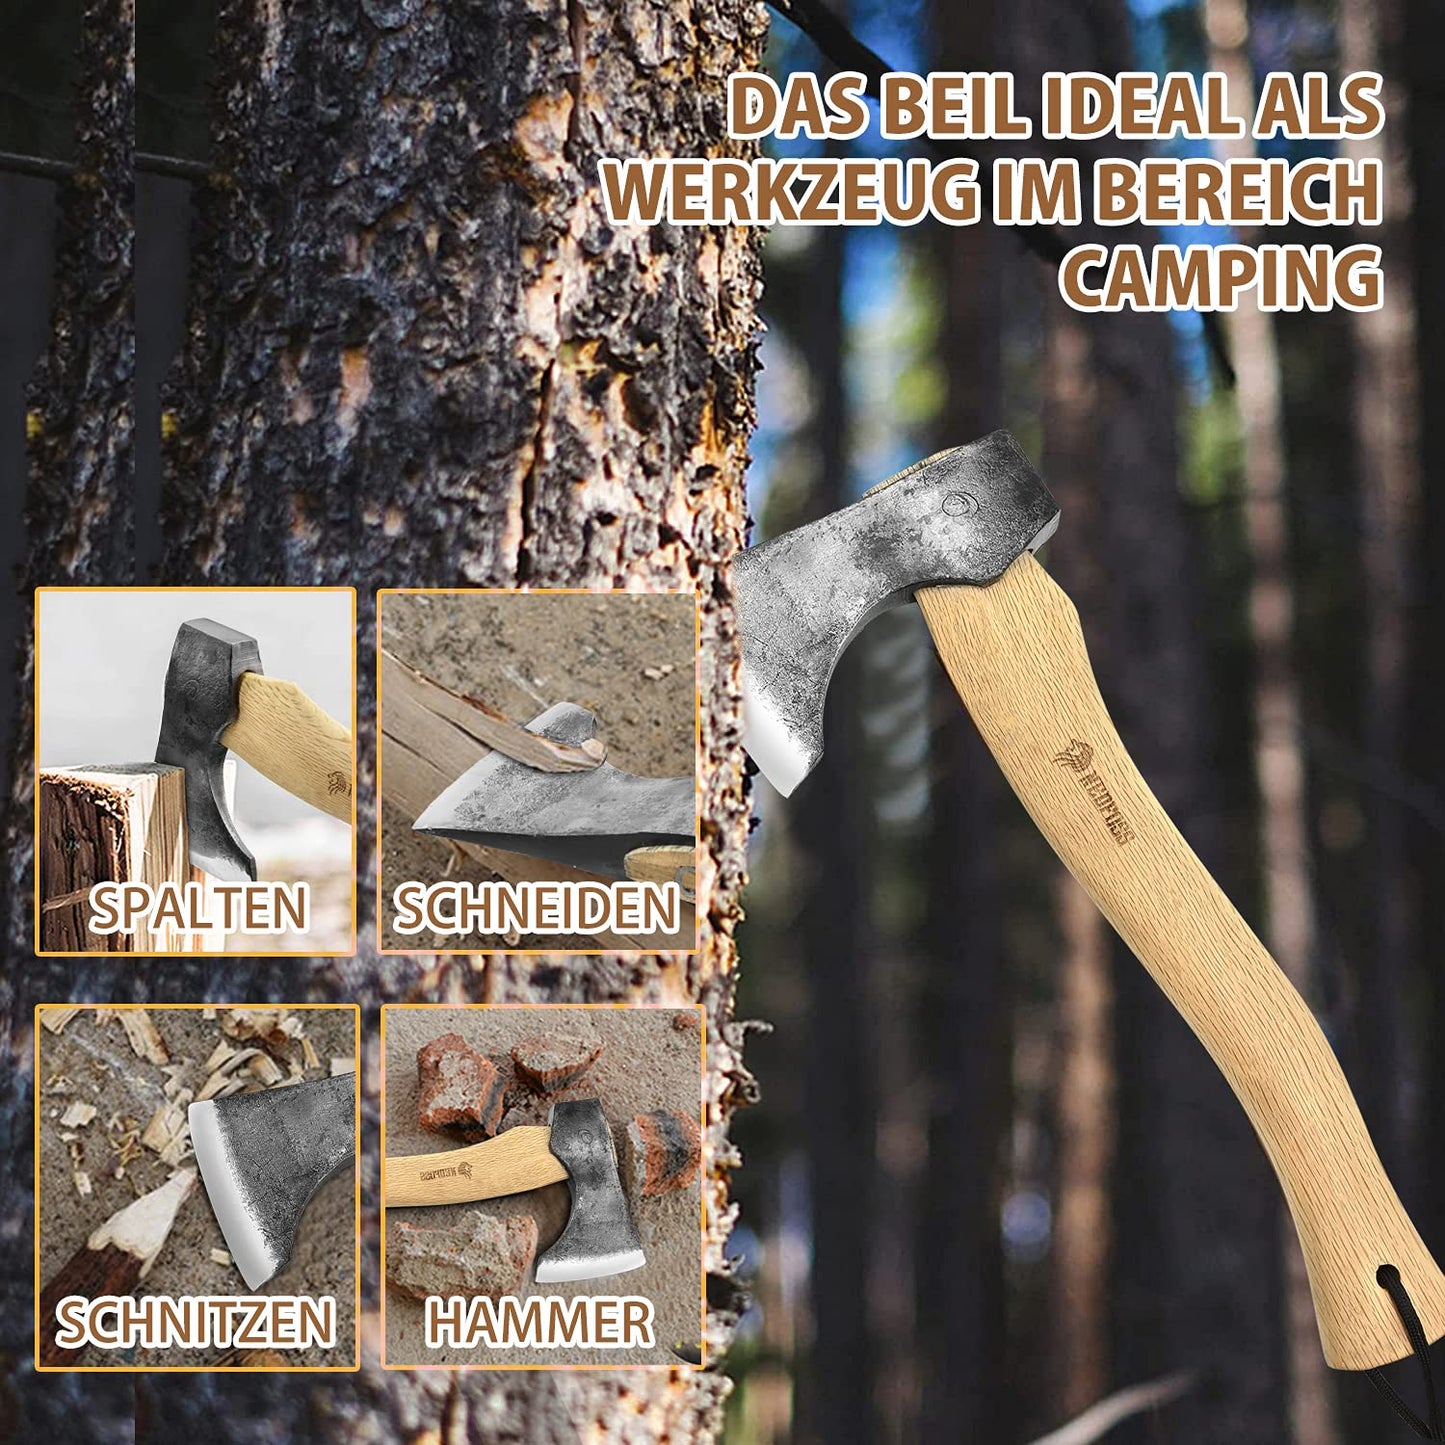 NedFoss HIPPO Axt, 33cm Camping Axt, Beil & Survival Axt, Hatchet & axt klein mit Holz Griff – Premium Jägerbeil robust- small Axe